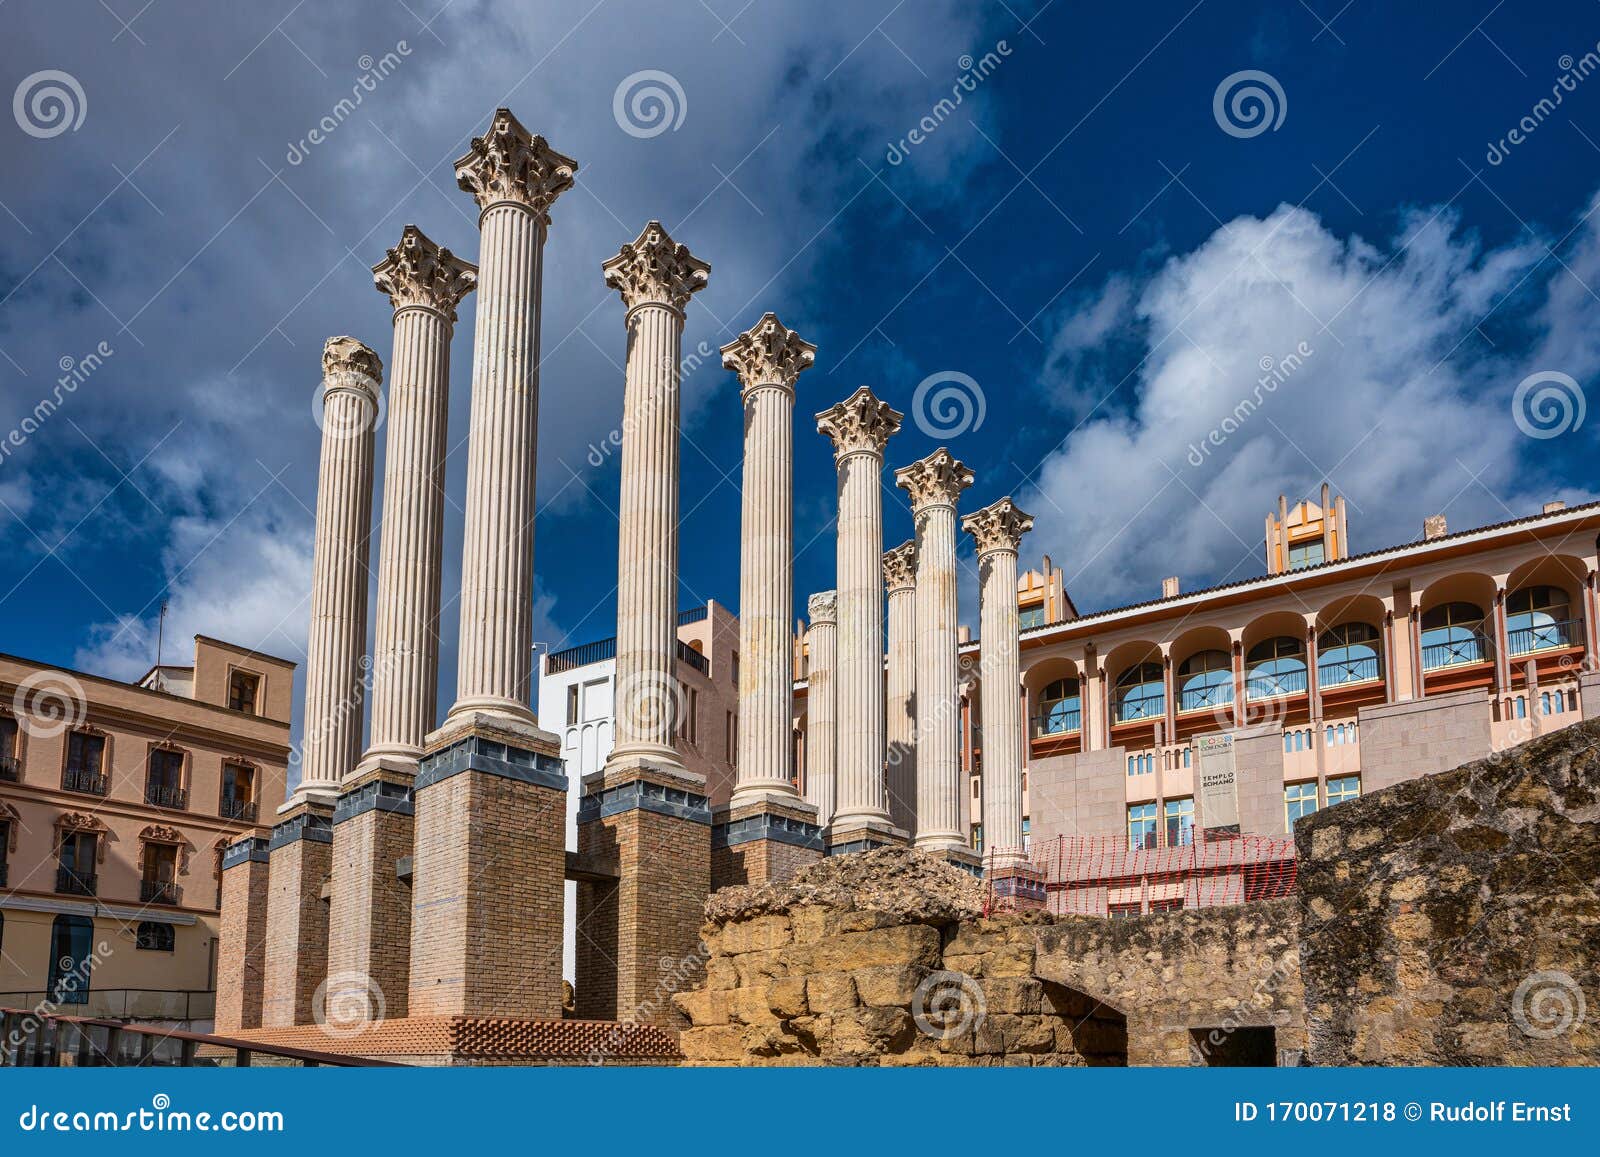 remaining columns of the roman temple, templo romano of cordoba, spain